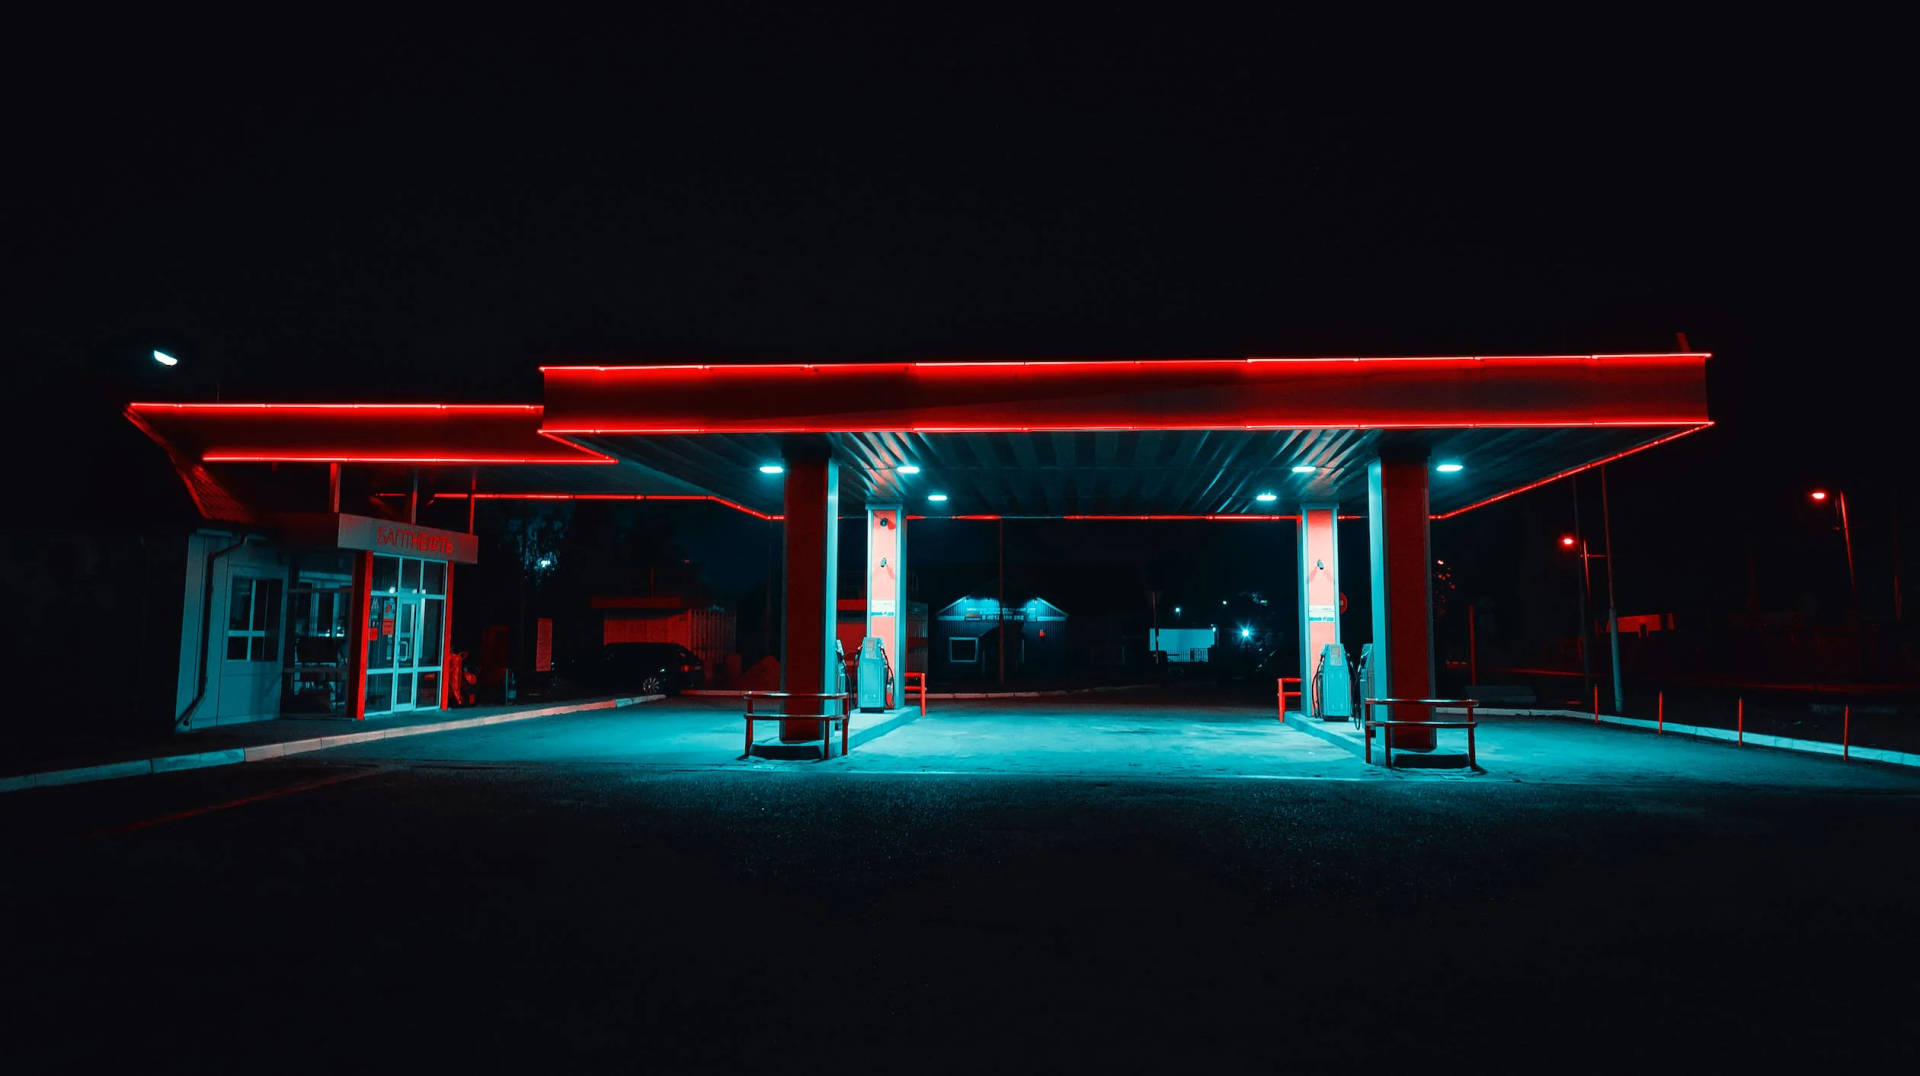 Gasoline Station Night City